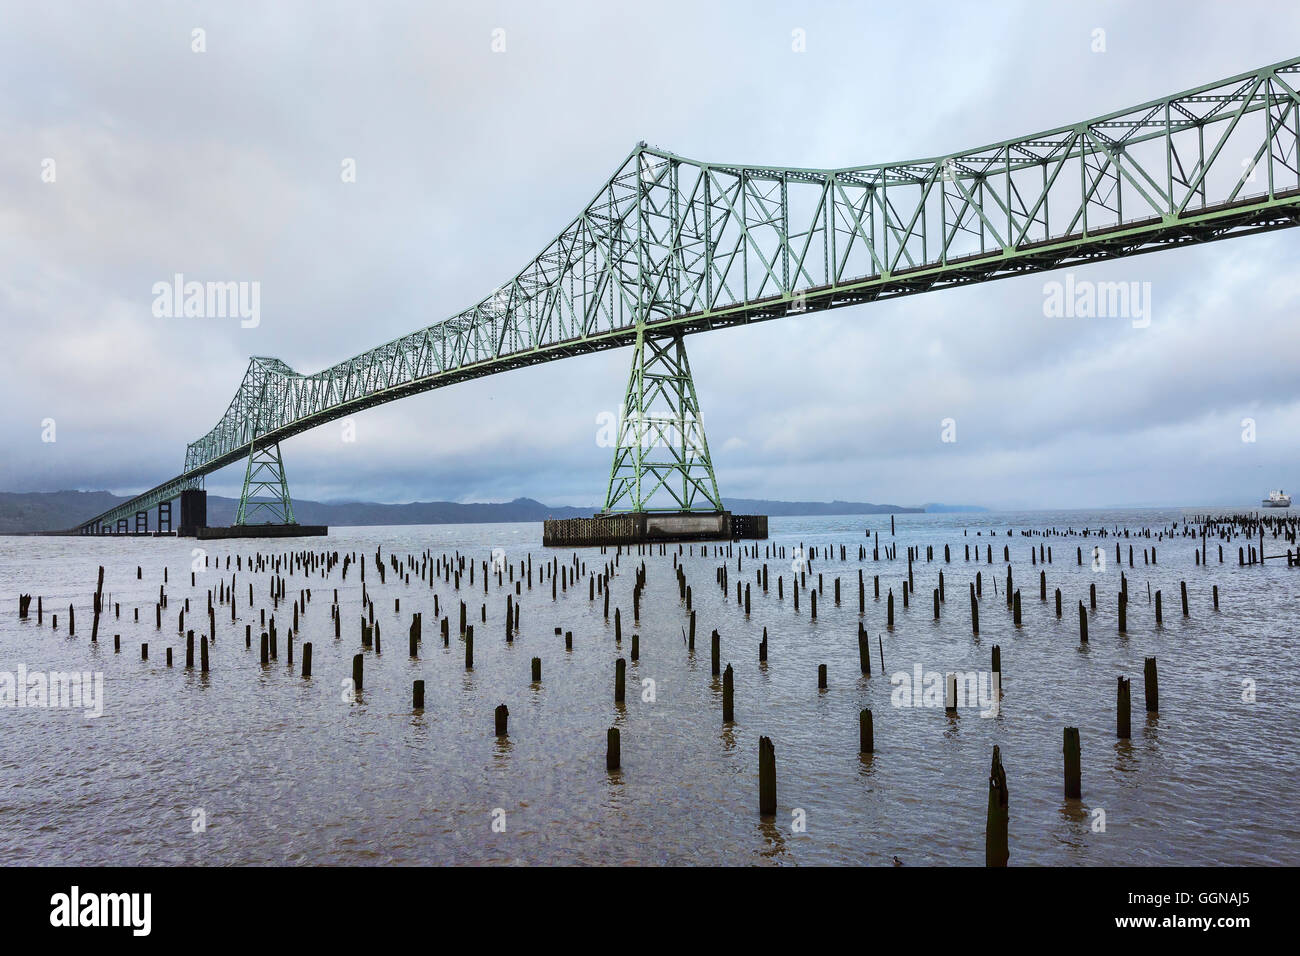 Astoria-Megler Bridge, Columbia River, a steel girder continuous truss bridge spanning the Columbia River Astoria, Oregon Stock Photo